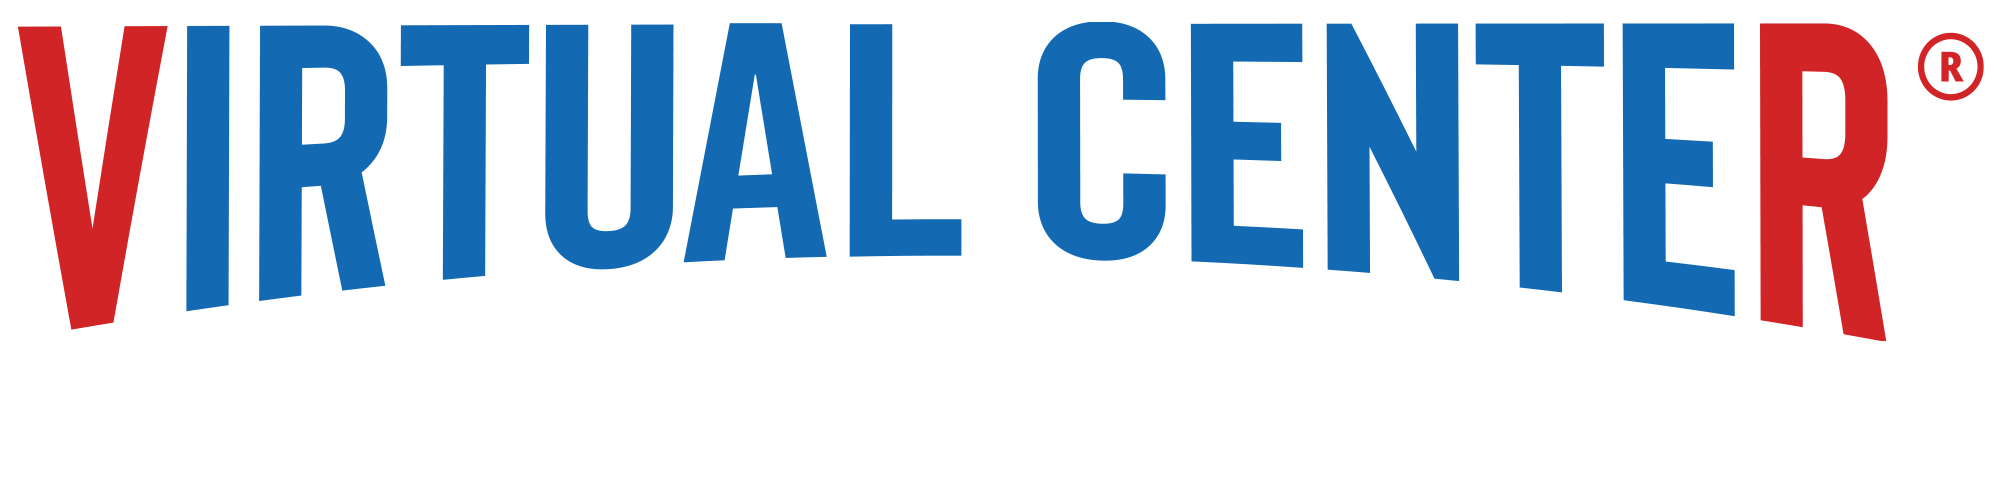 Virtual Center Nantes Ouest